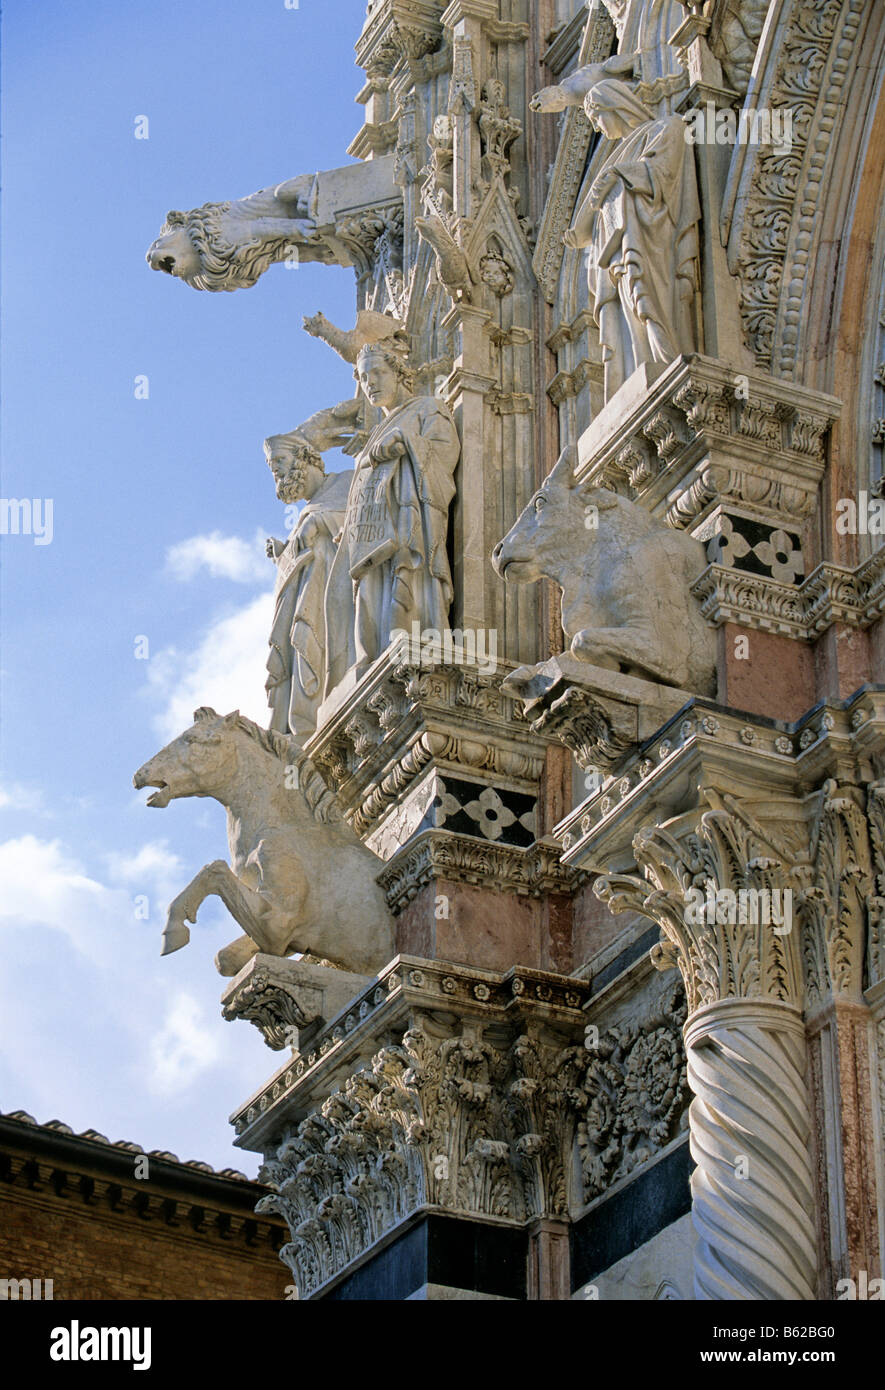 Santa Maria Assunta Cathedral, facade, detail with statues, animal figures, Siena, Tuscany, Italy, Europe Stock Photo